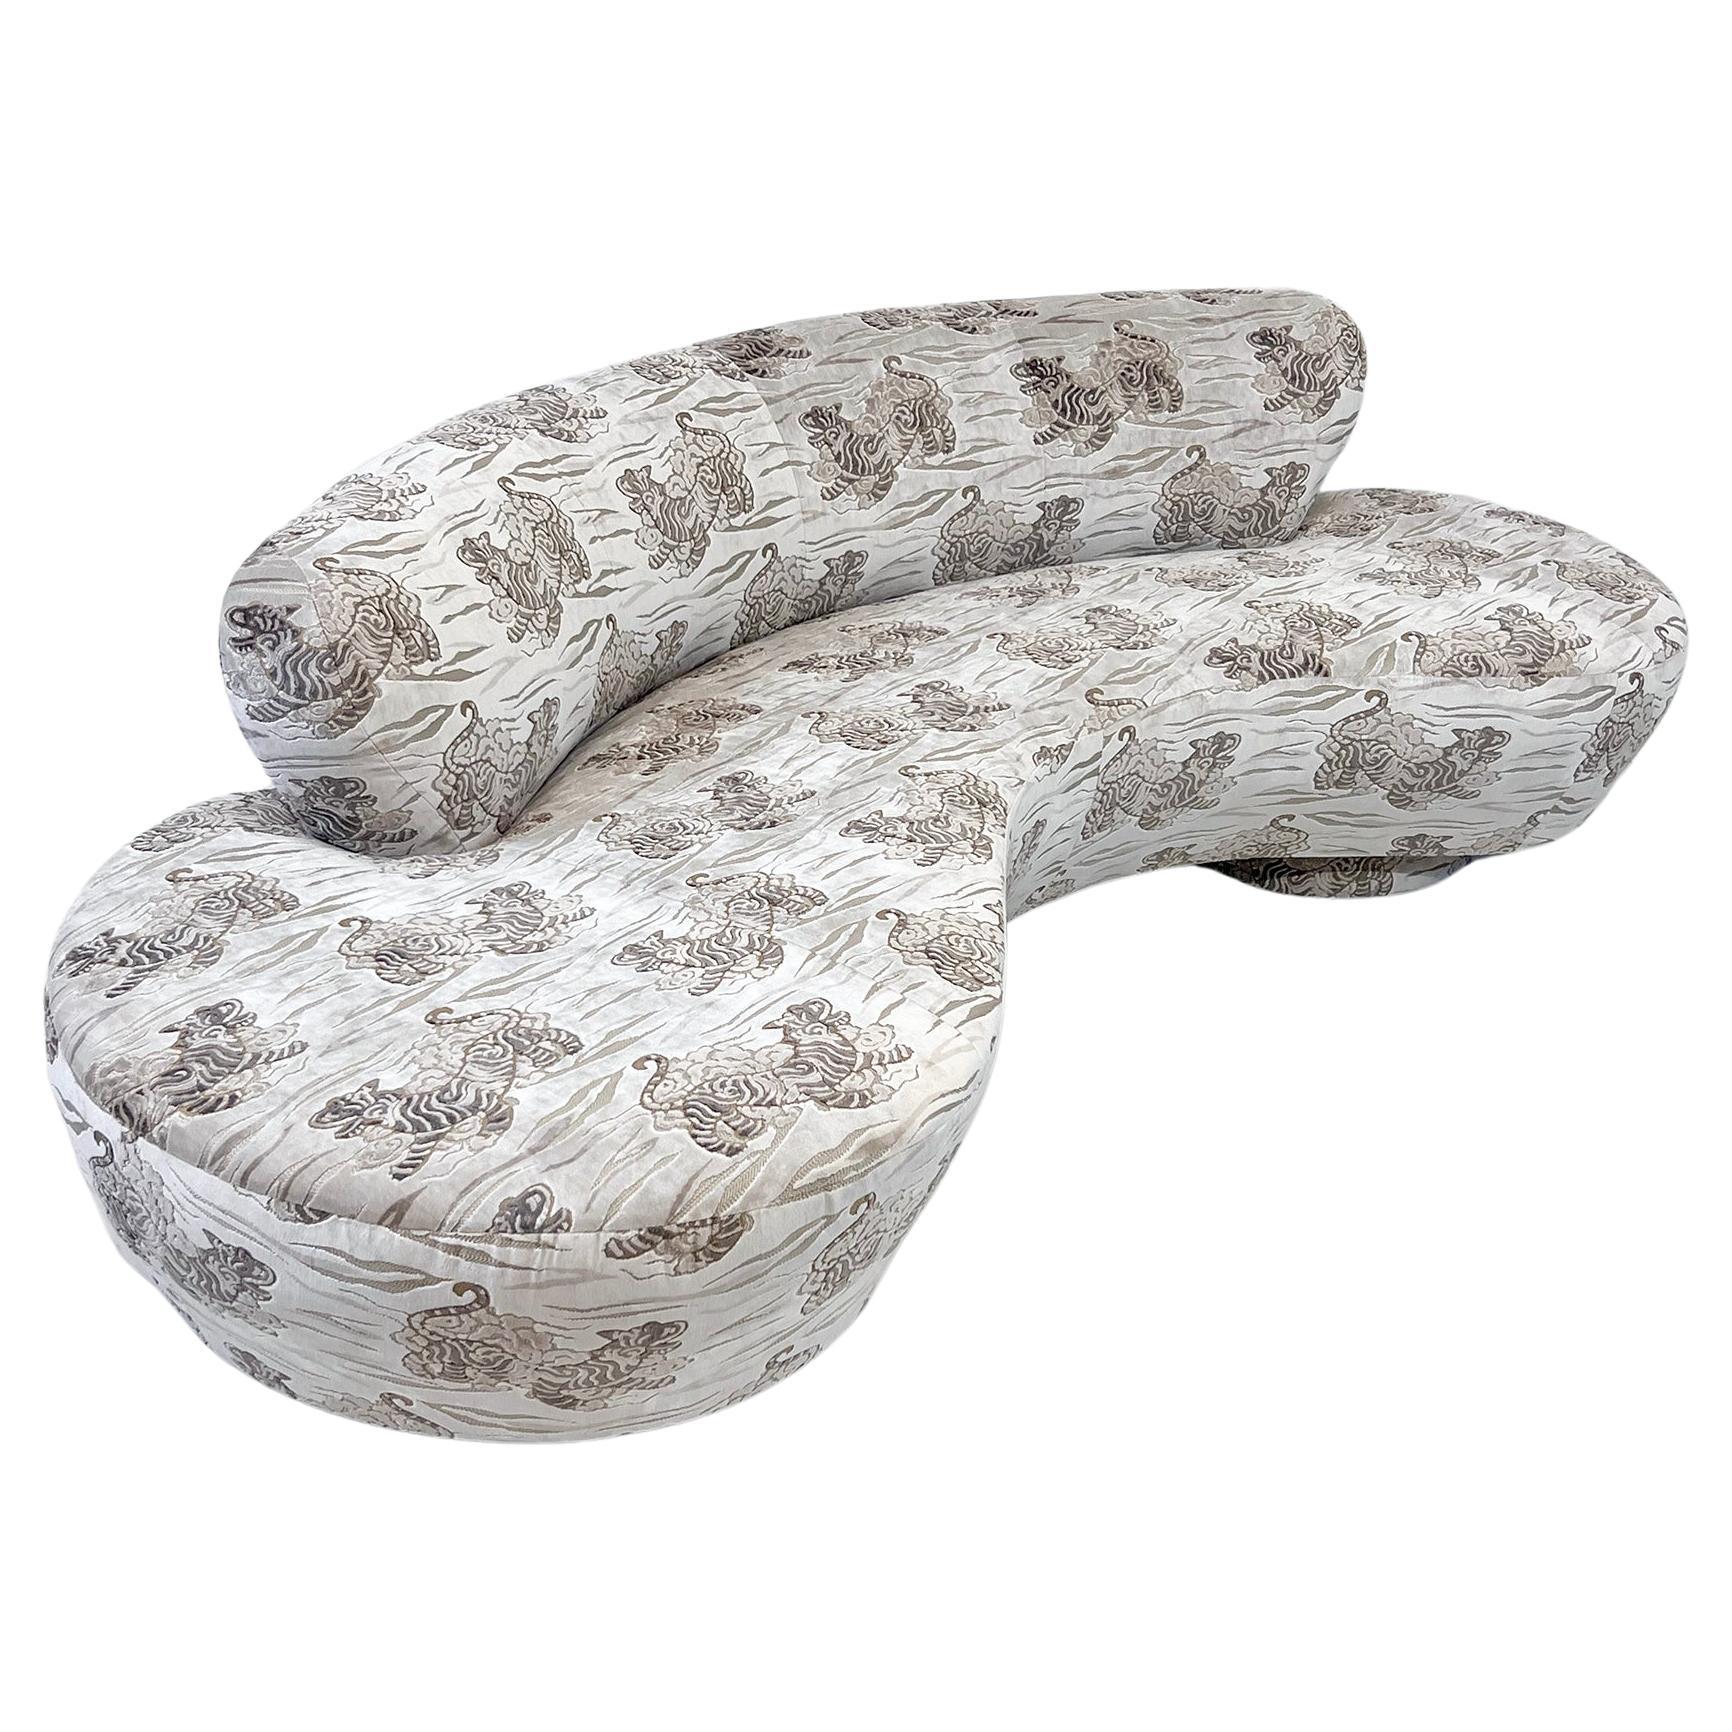 Vladimir Kagan Serpentine Cloud Sofa, Directional, in Chinoiserie Tiger Velvet For Sale